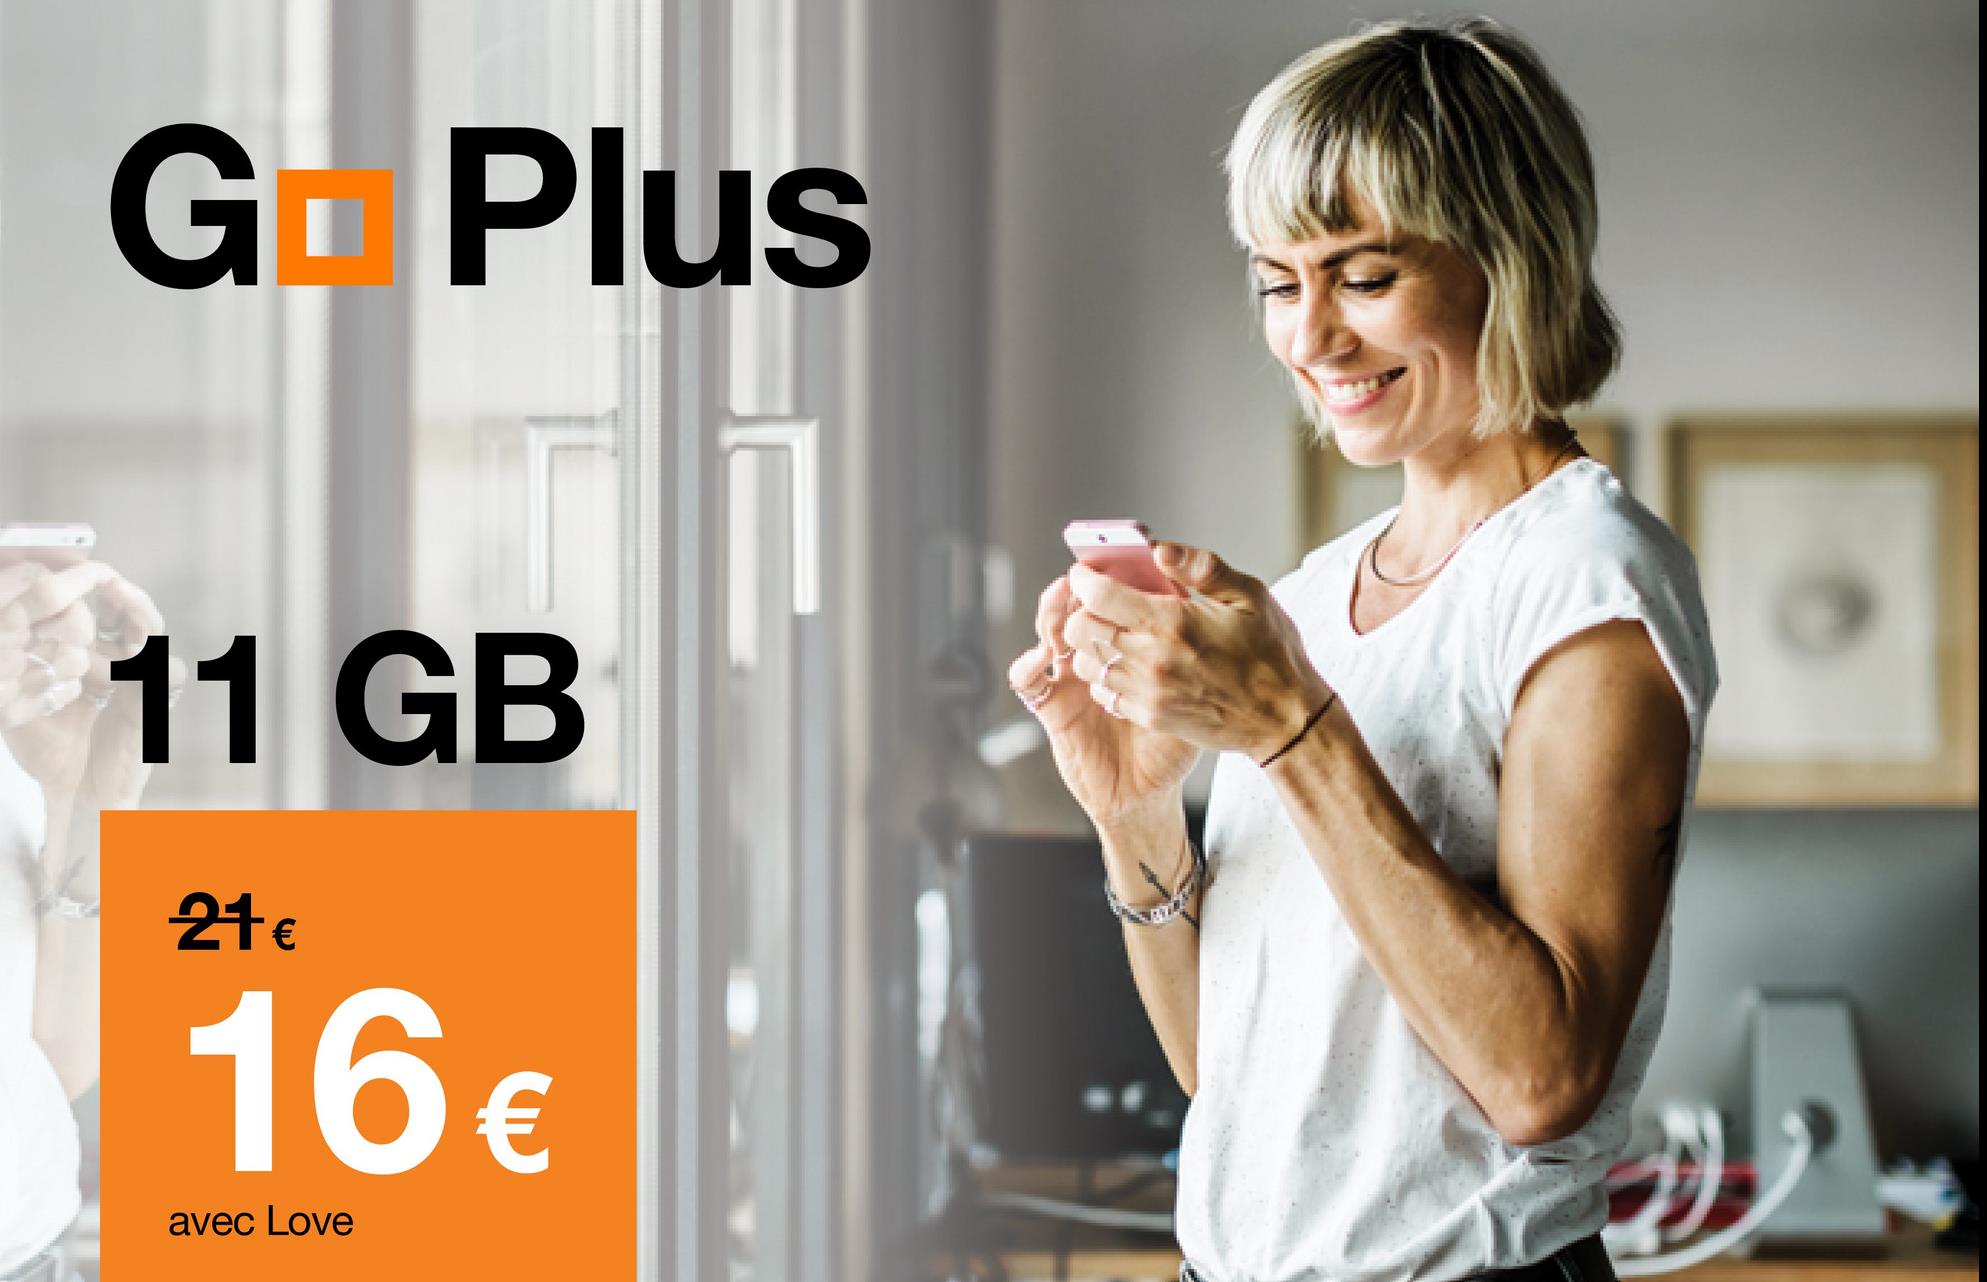 G Plus
11 GB
21€
16€
avec Love
BIHA